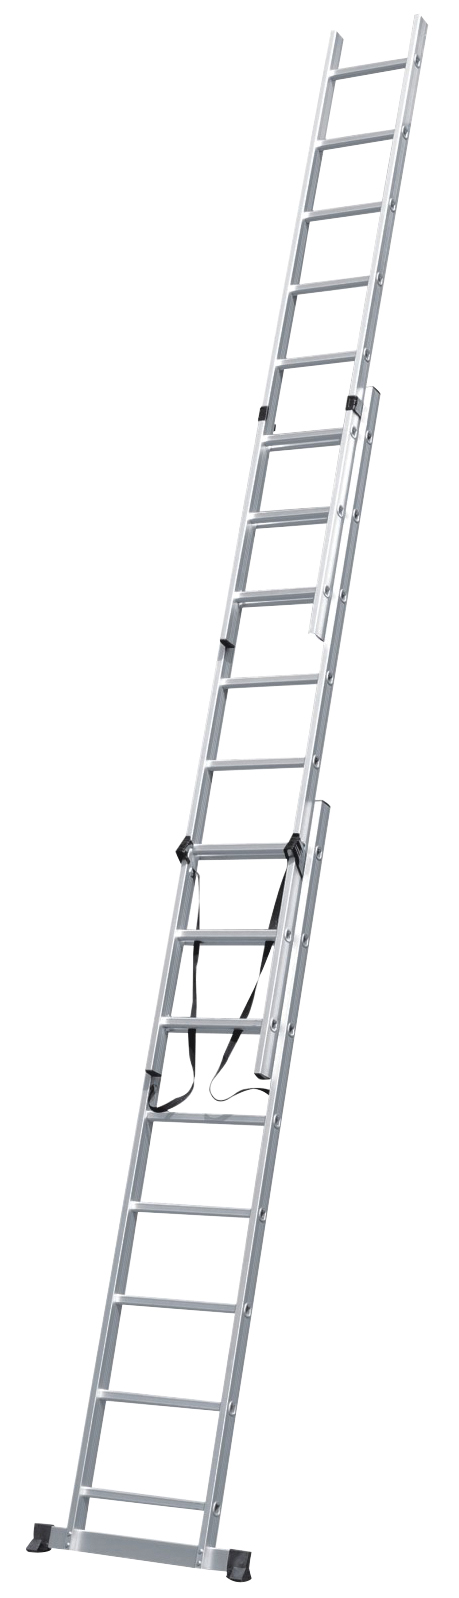 Triple Extension Ladder 33 steps (3x11) Bulle - 1